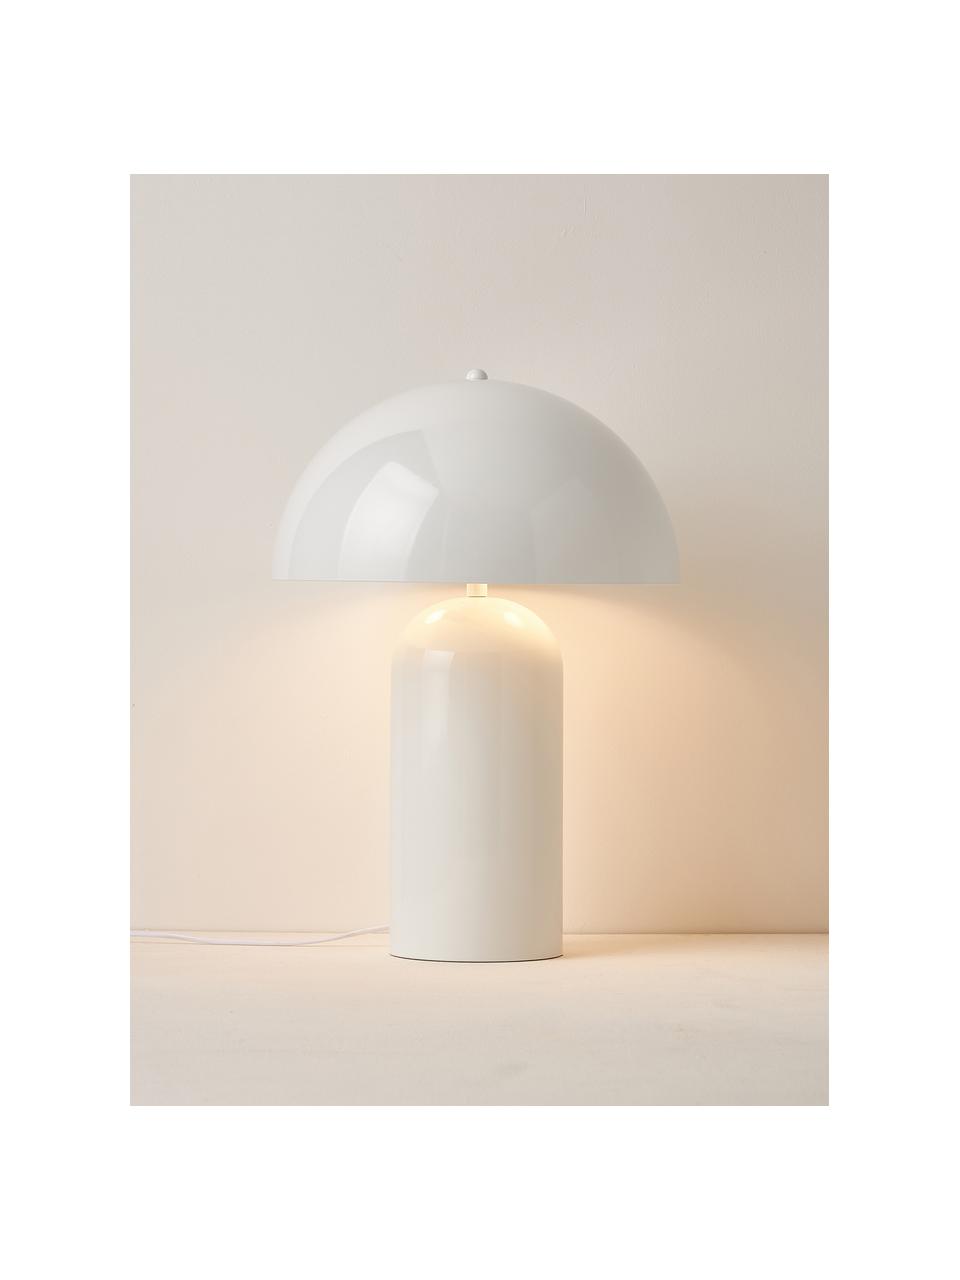 Grote retro tafellamp Walter, Wit, glanzend, Ø 38 x H 55 cm